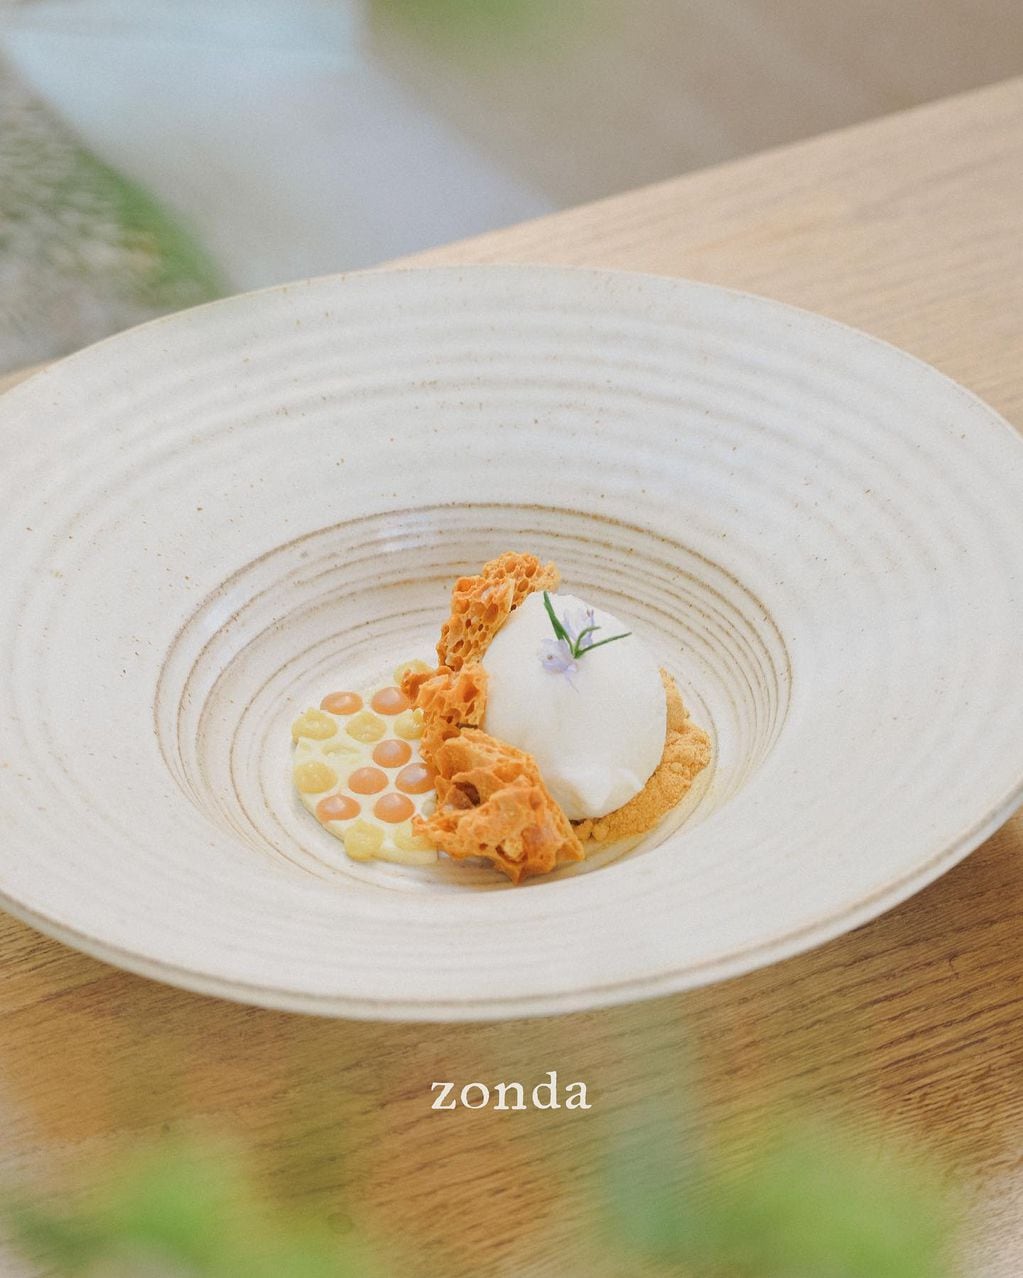 Gastronomía ganadora de estrella Michelin, plato de Zonda.